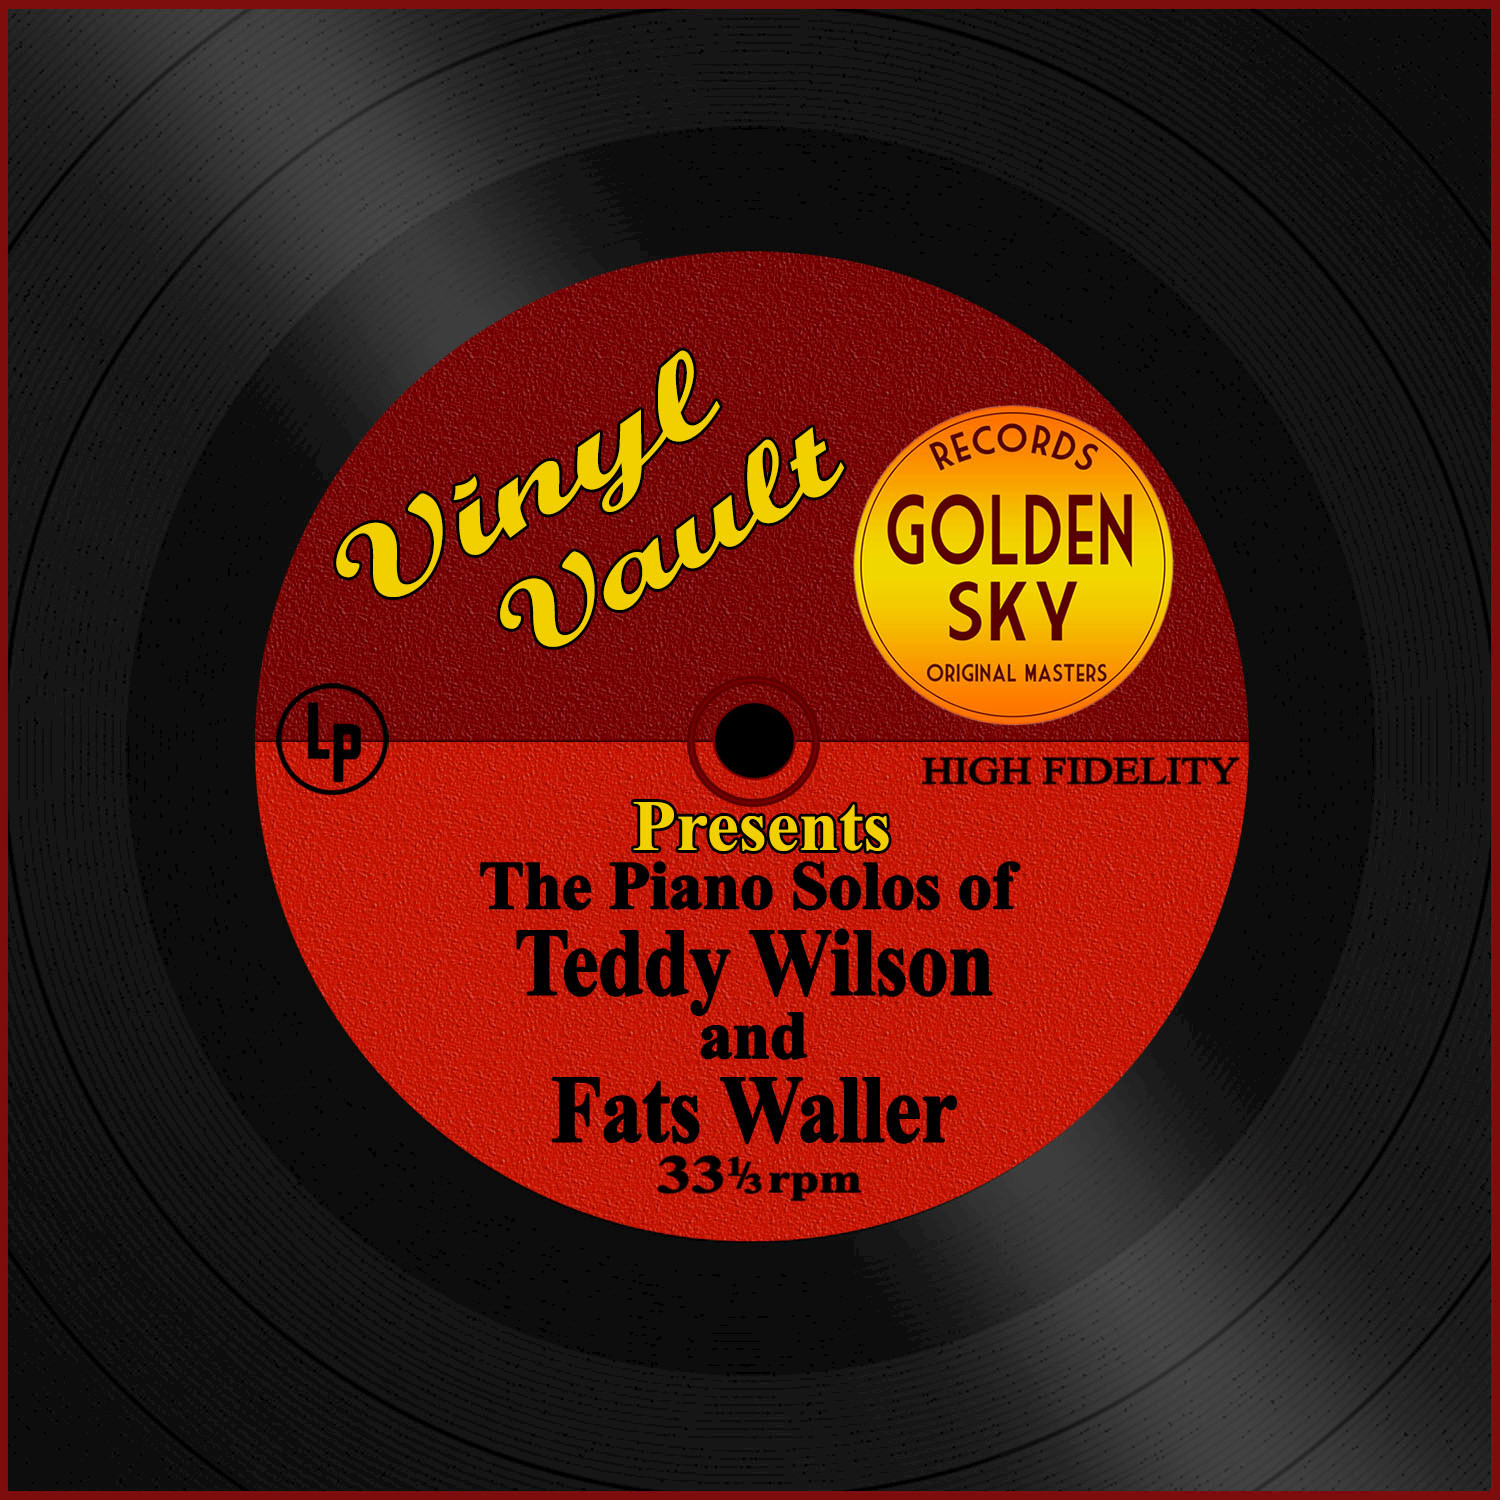 Vinyl Vault Presents the Piano Solos of Teddy Wilson and Fats Waller